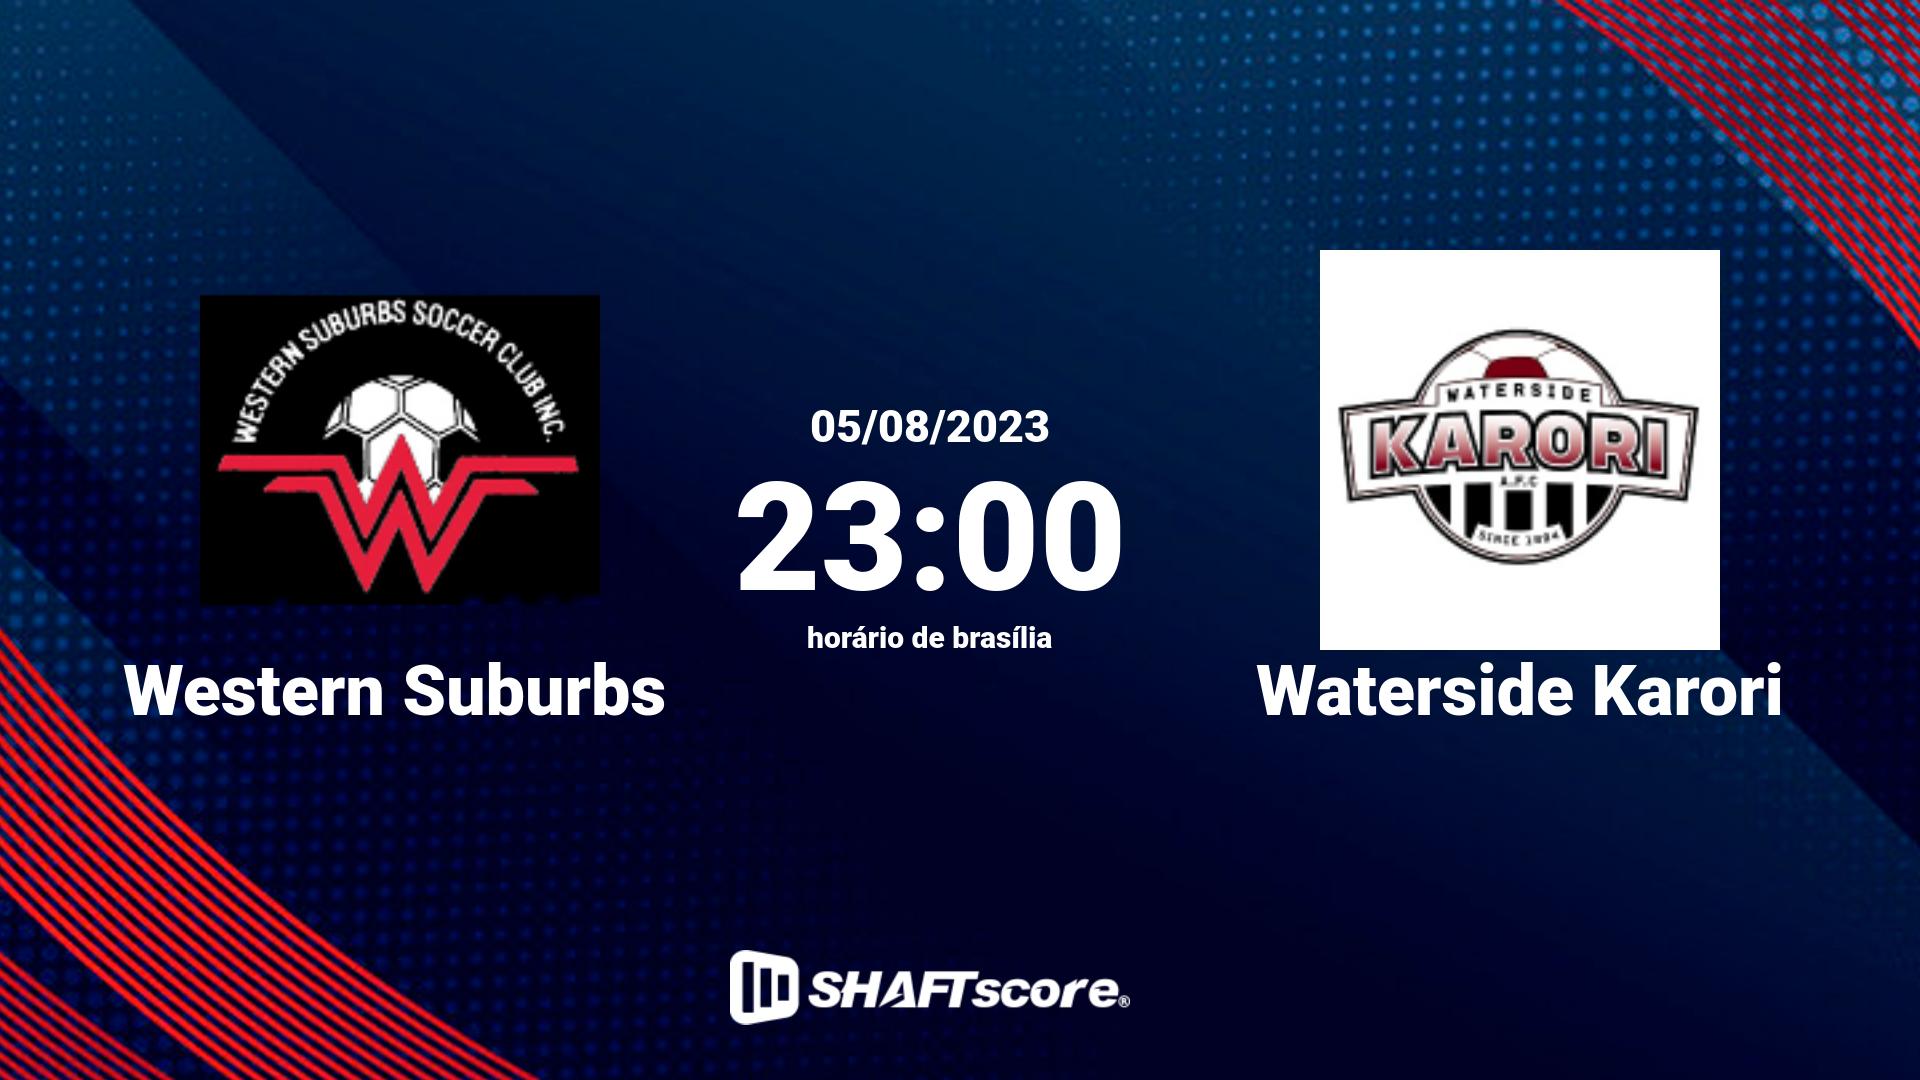 Estatísticas do jogo Western Suburbs vs Waterside Karori 05.08 23:00